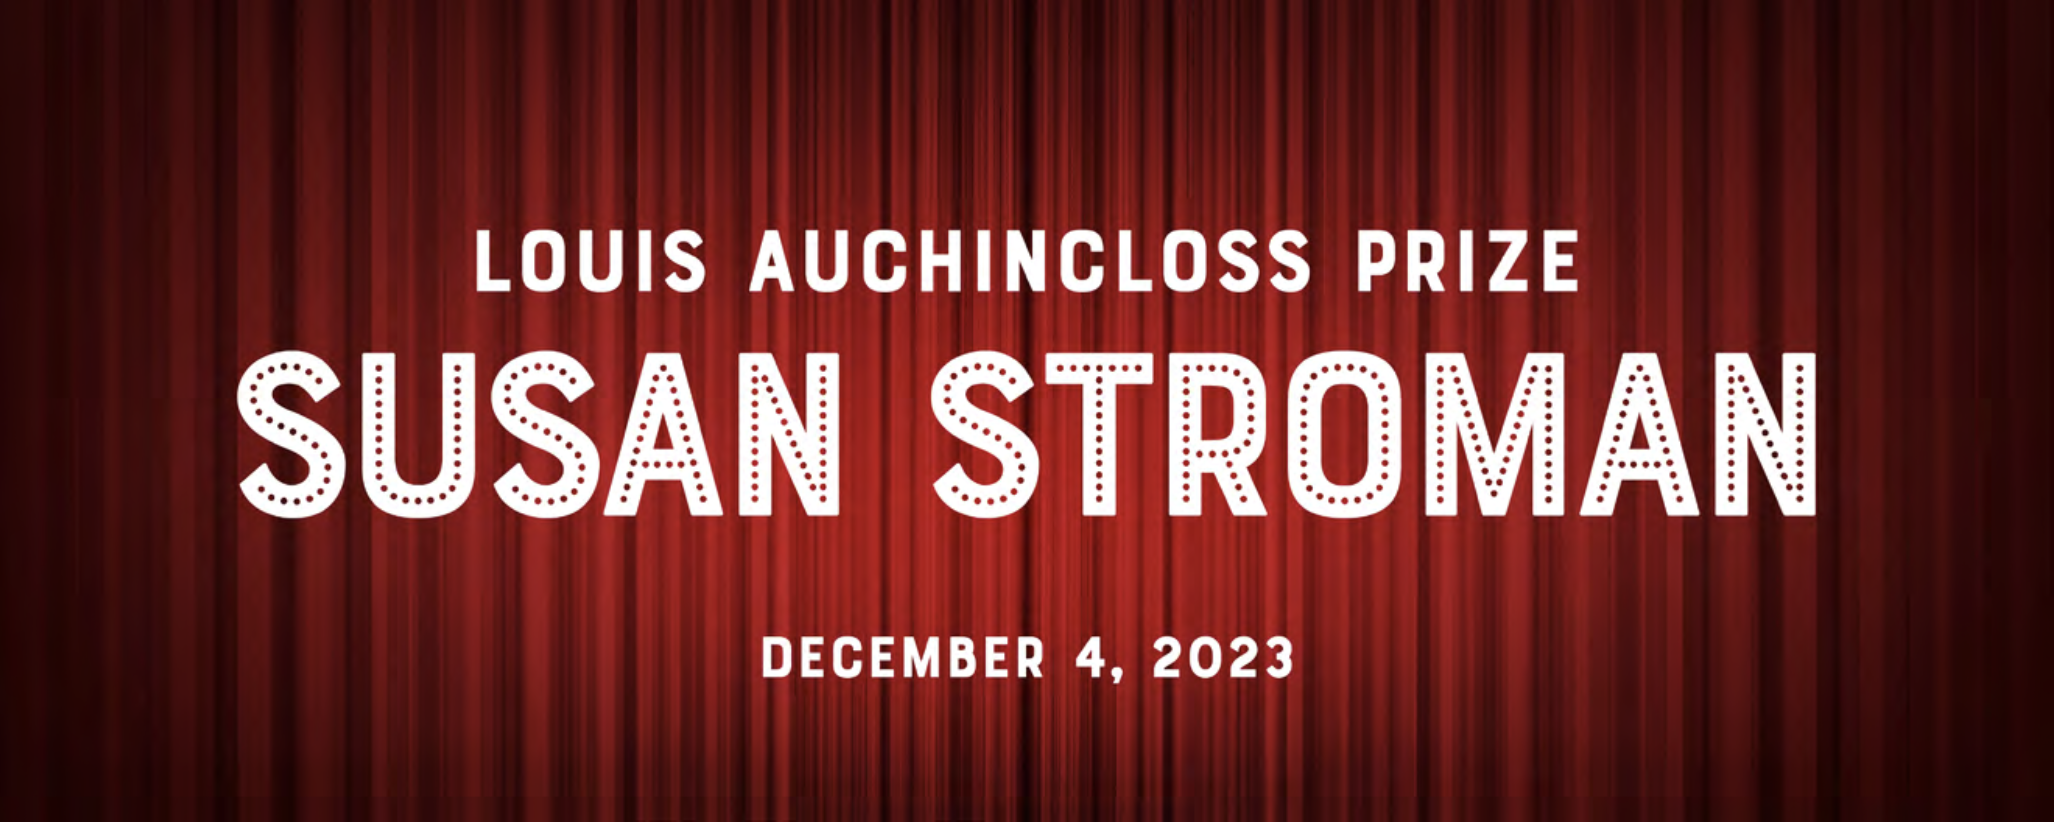 Louis Auchincloss Prize honoring Susan Stroman